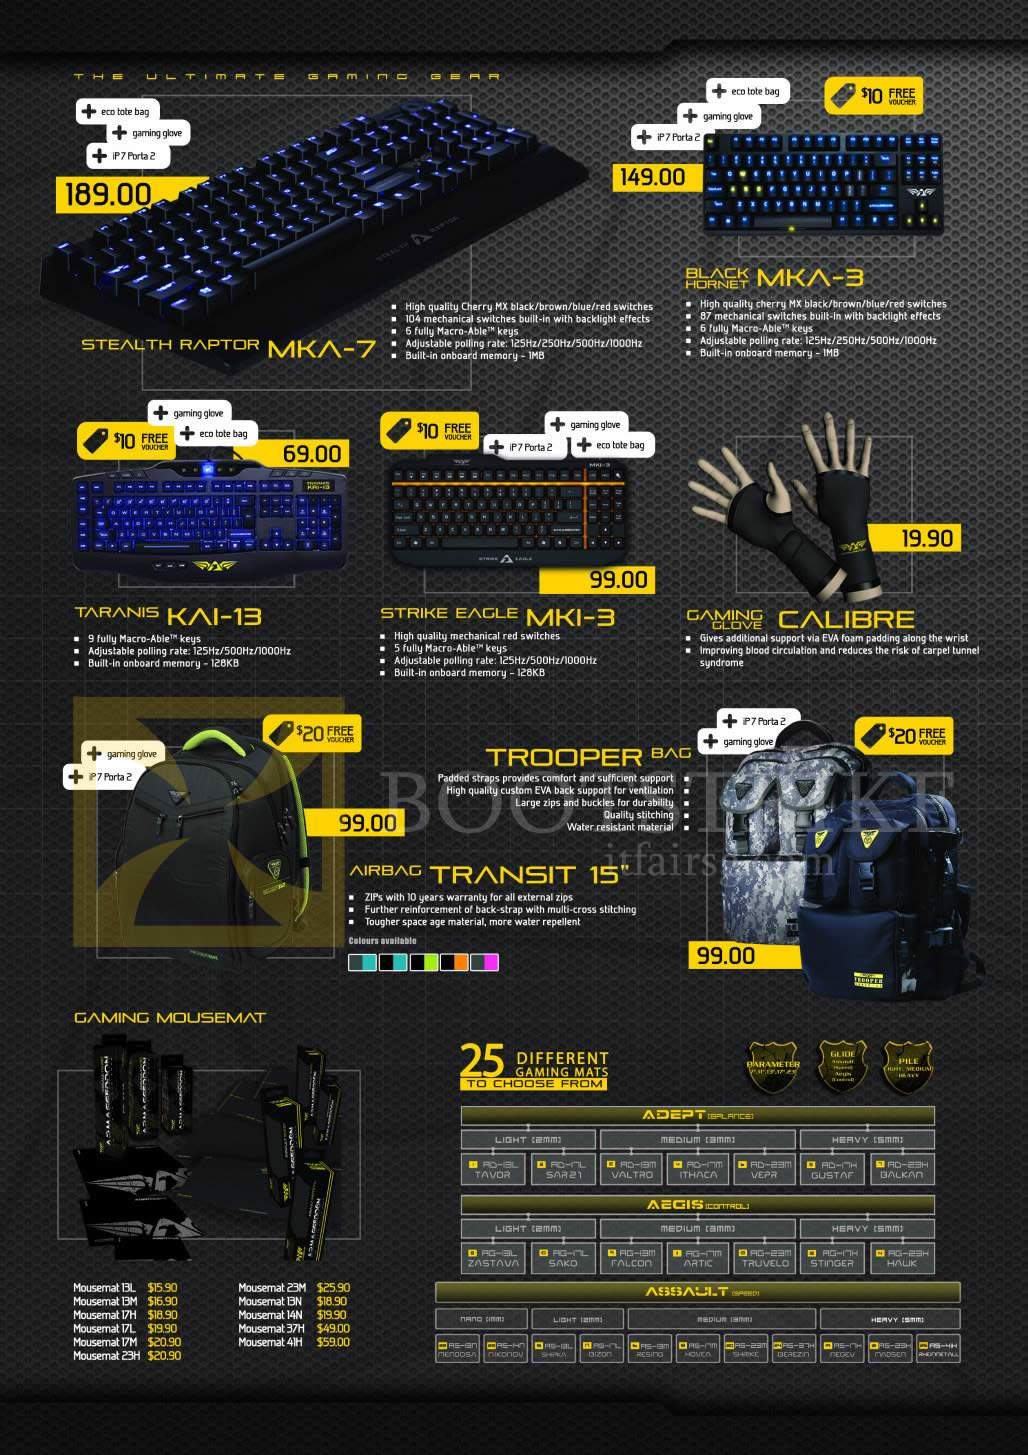 IT SHOW 2014 price list image brochure of Leap Frog Armaggeddon Keyboards Stealth Raptor, Black Hornet MKA, Taranis, Strike Eagle, Gaming Glove, Bags, Mouse Pad